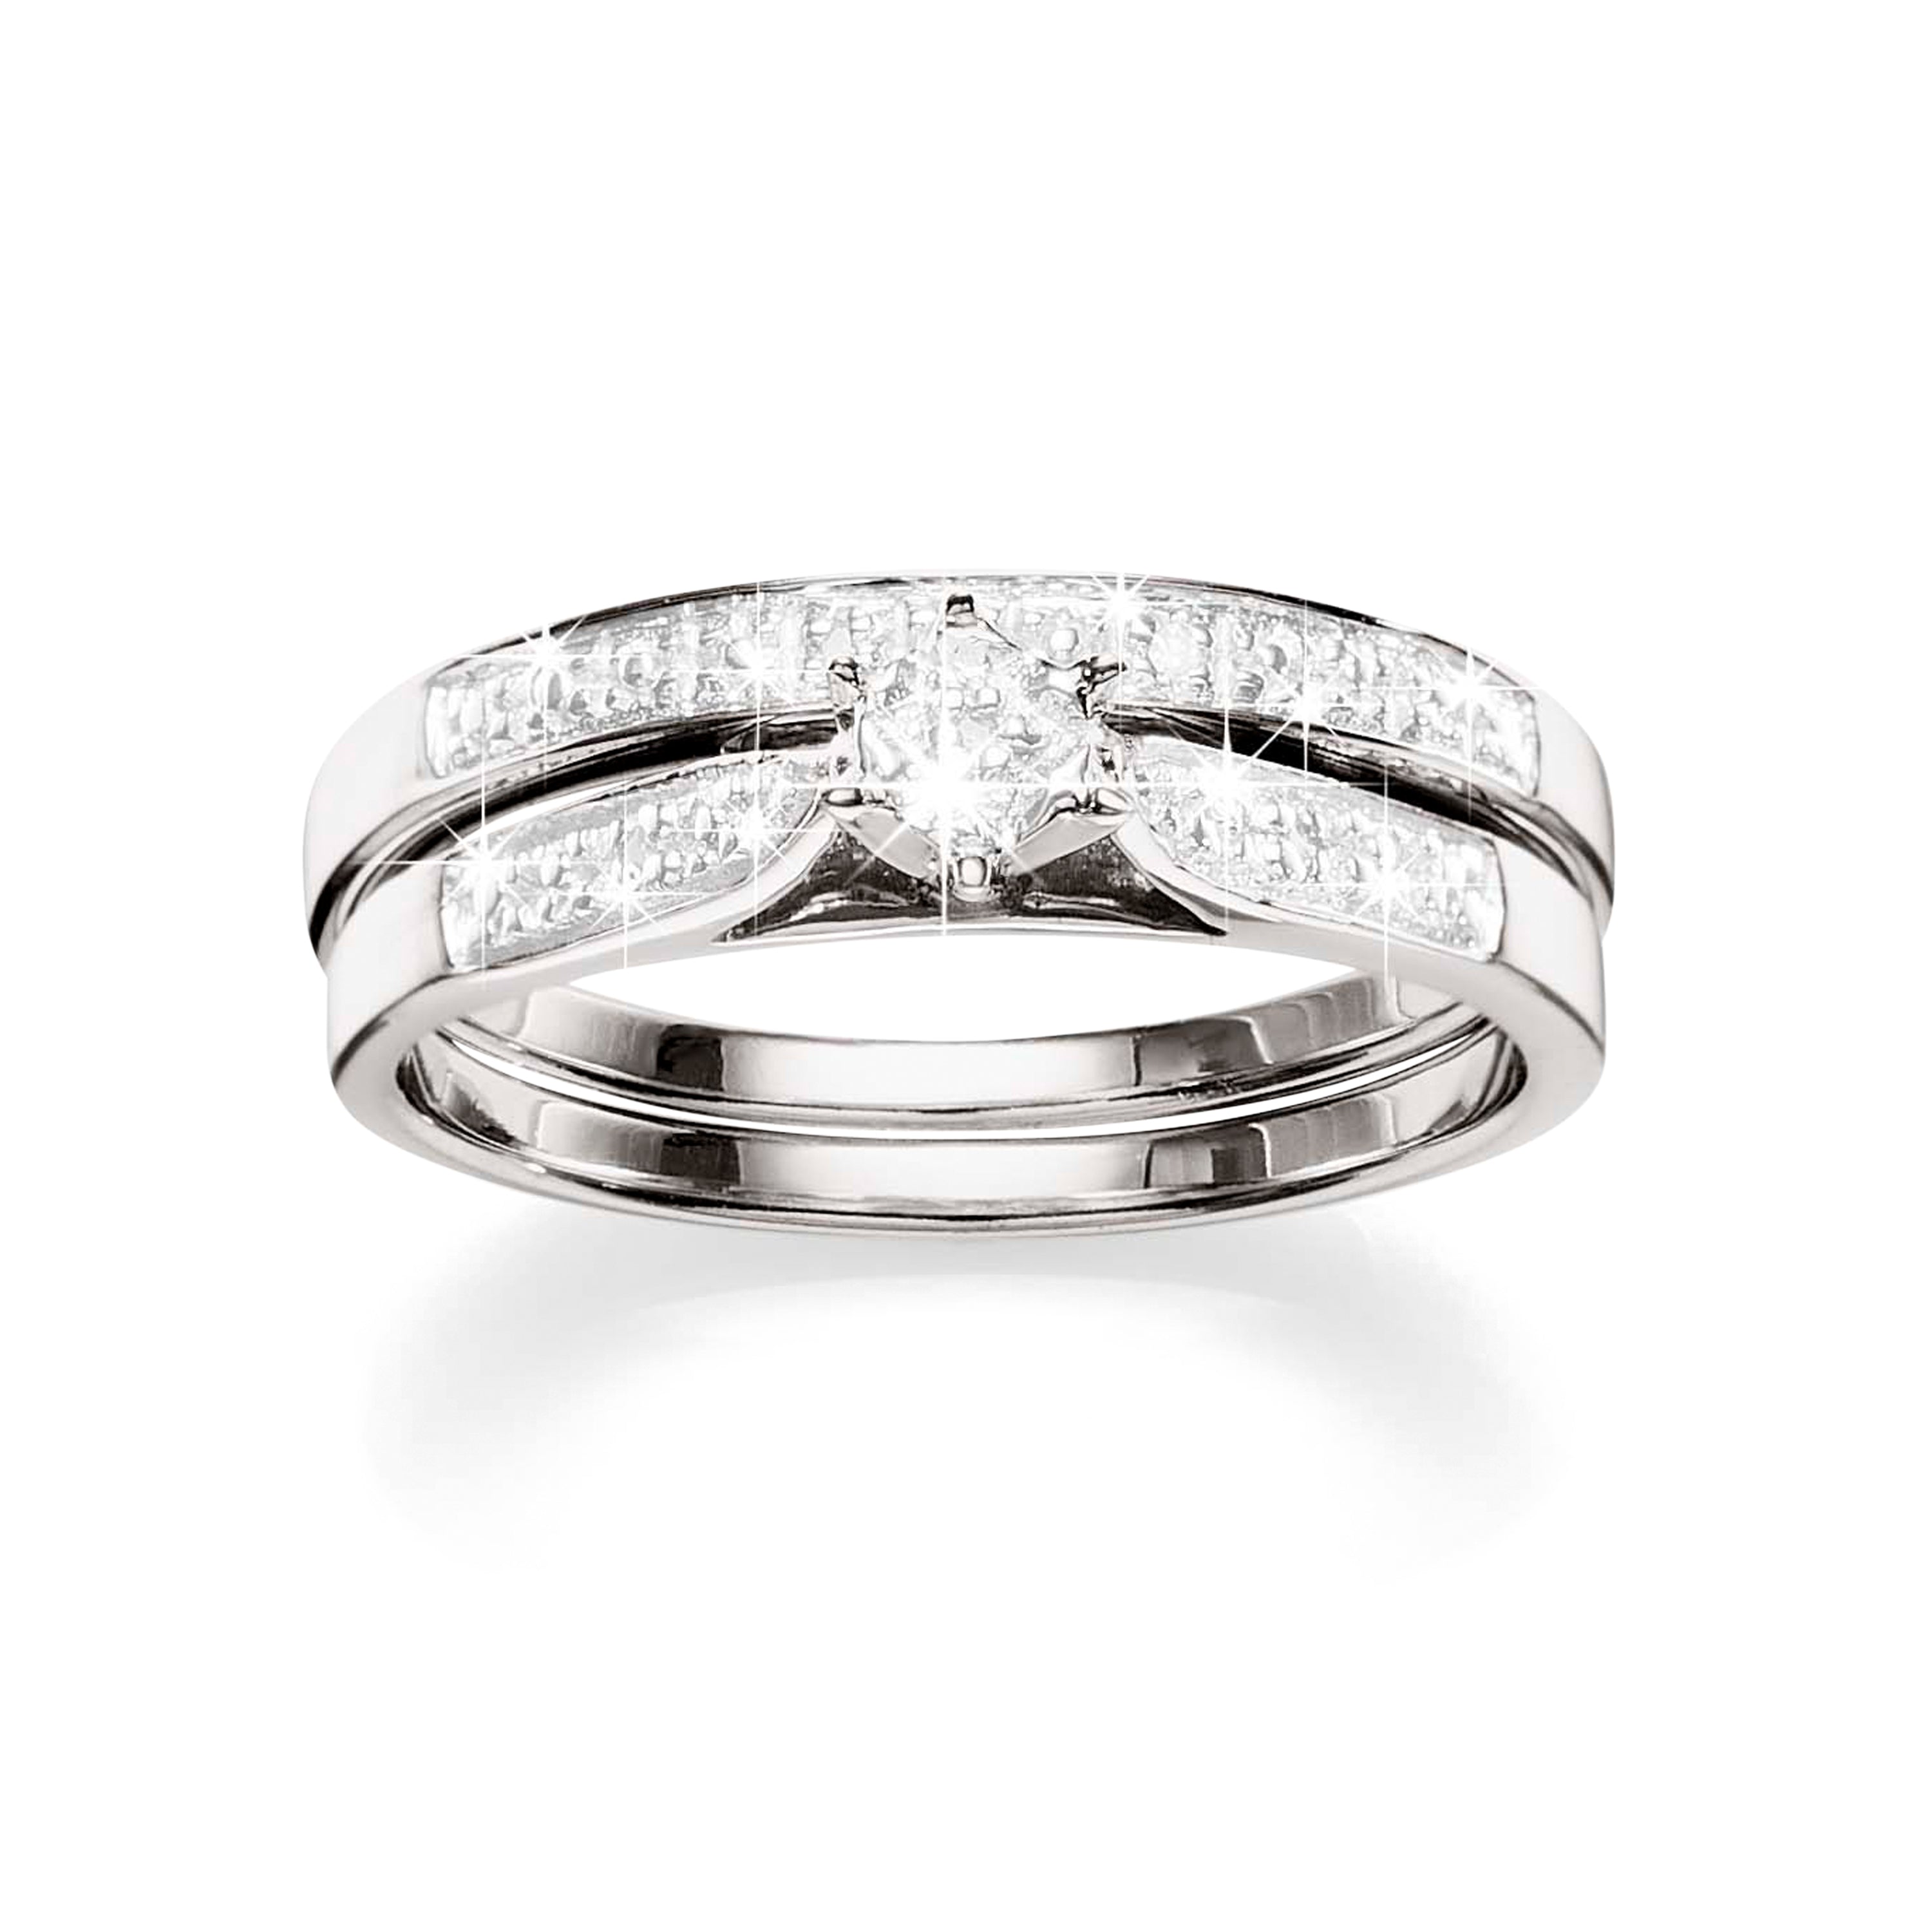 Silver diamond 2 ring set